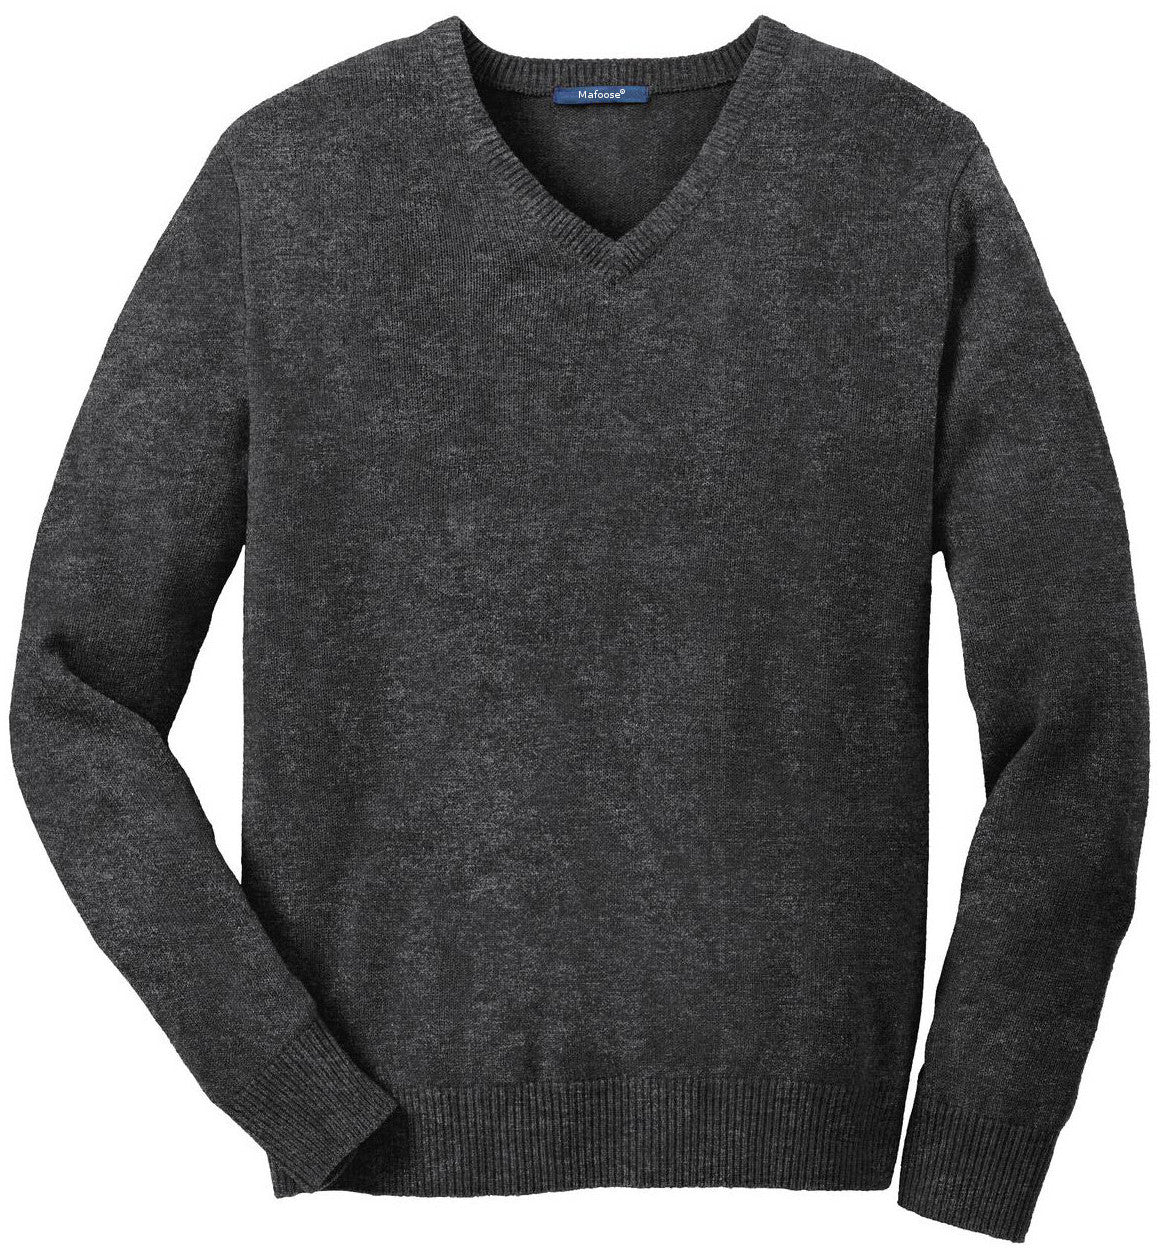 Mafoose Men's Value V-Neck Sweater Charcoal Grey-Front